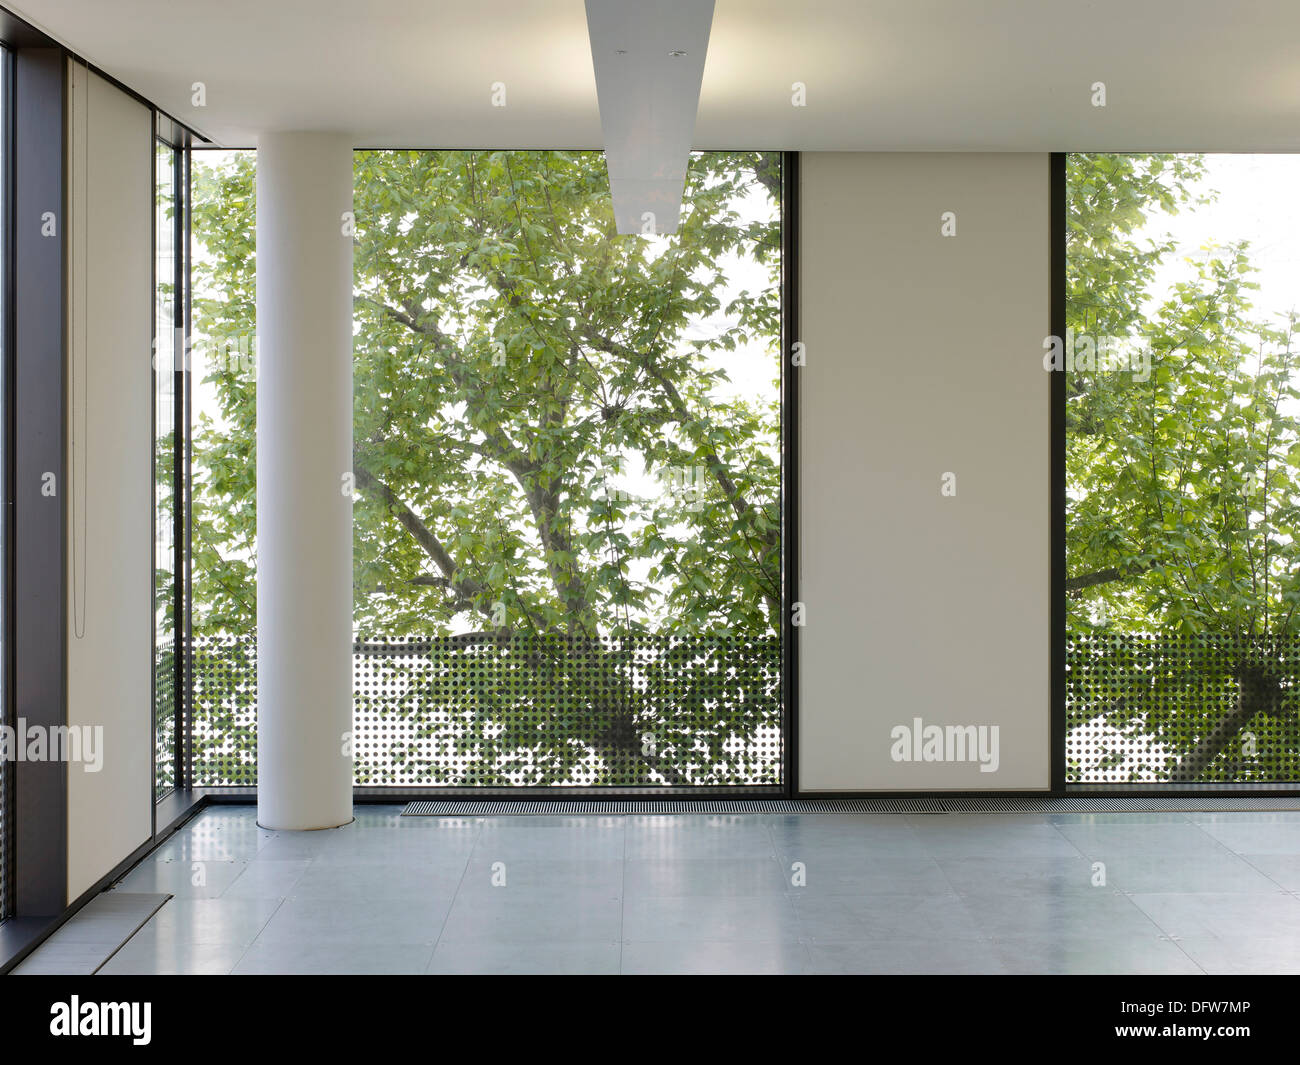 One Valentine Place, London, United Kingdom. Architect: Stiff + Trevillion Architects, 2013. Window and view. Stock Photo